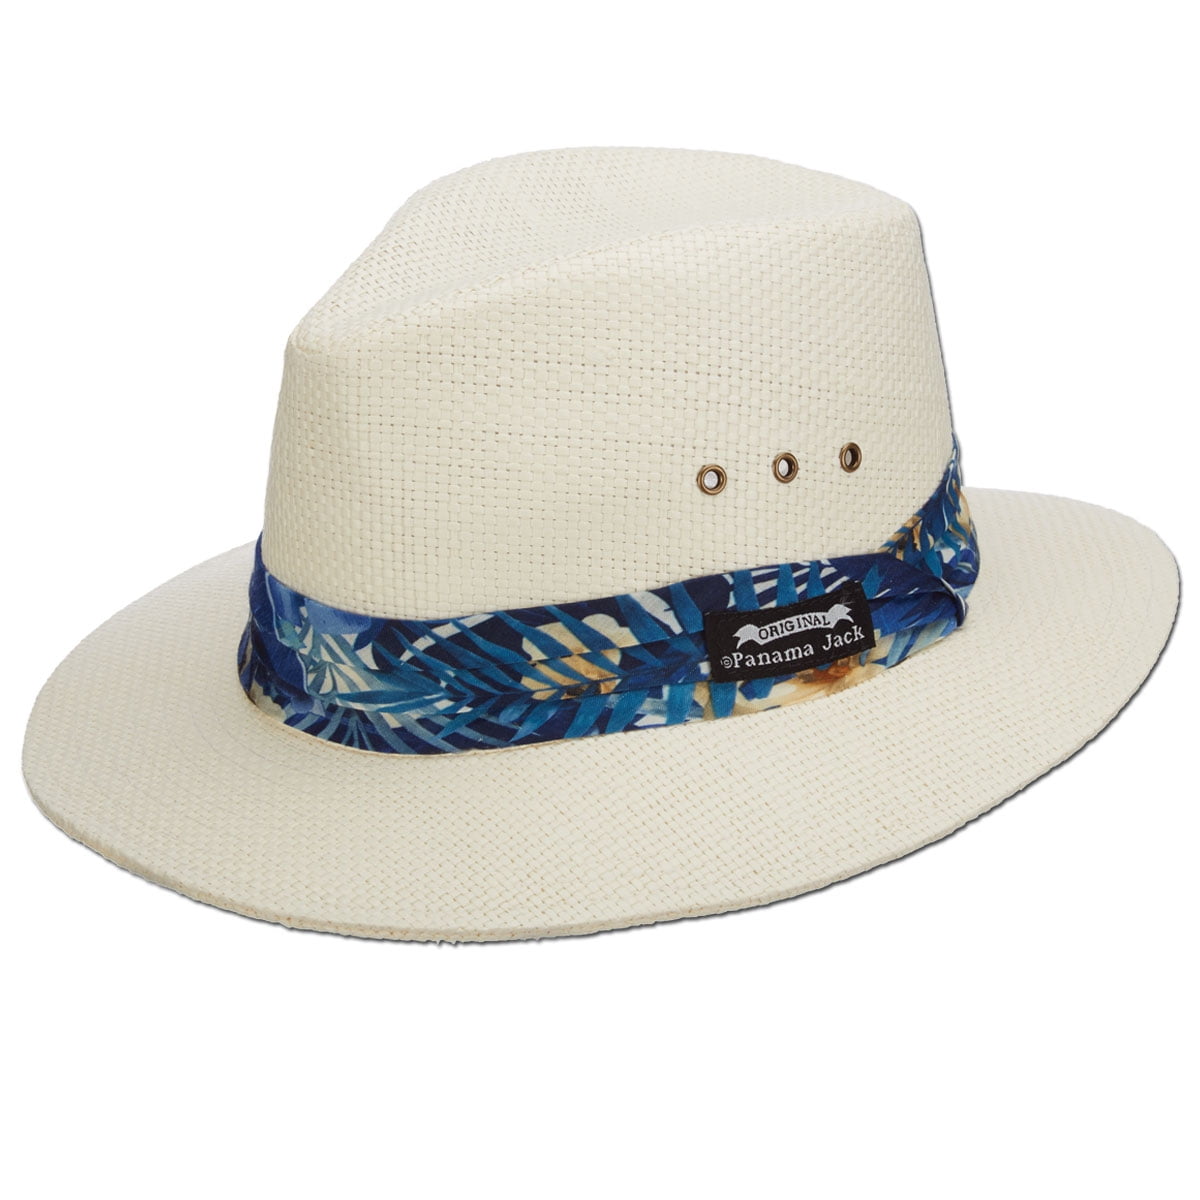 Panama Jack Woven Matte Toyo Safari Hat, UPF 50+ UVA/UVB Sun